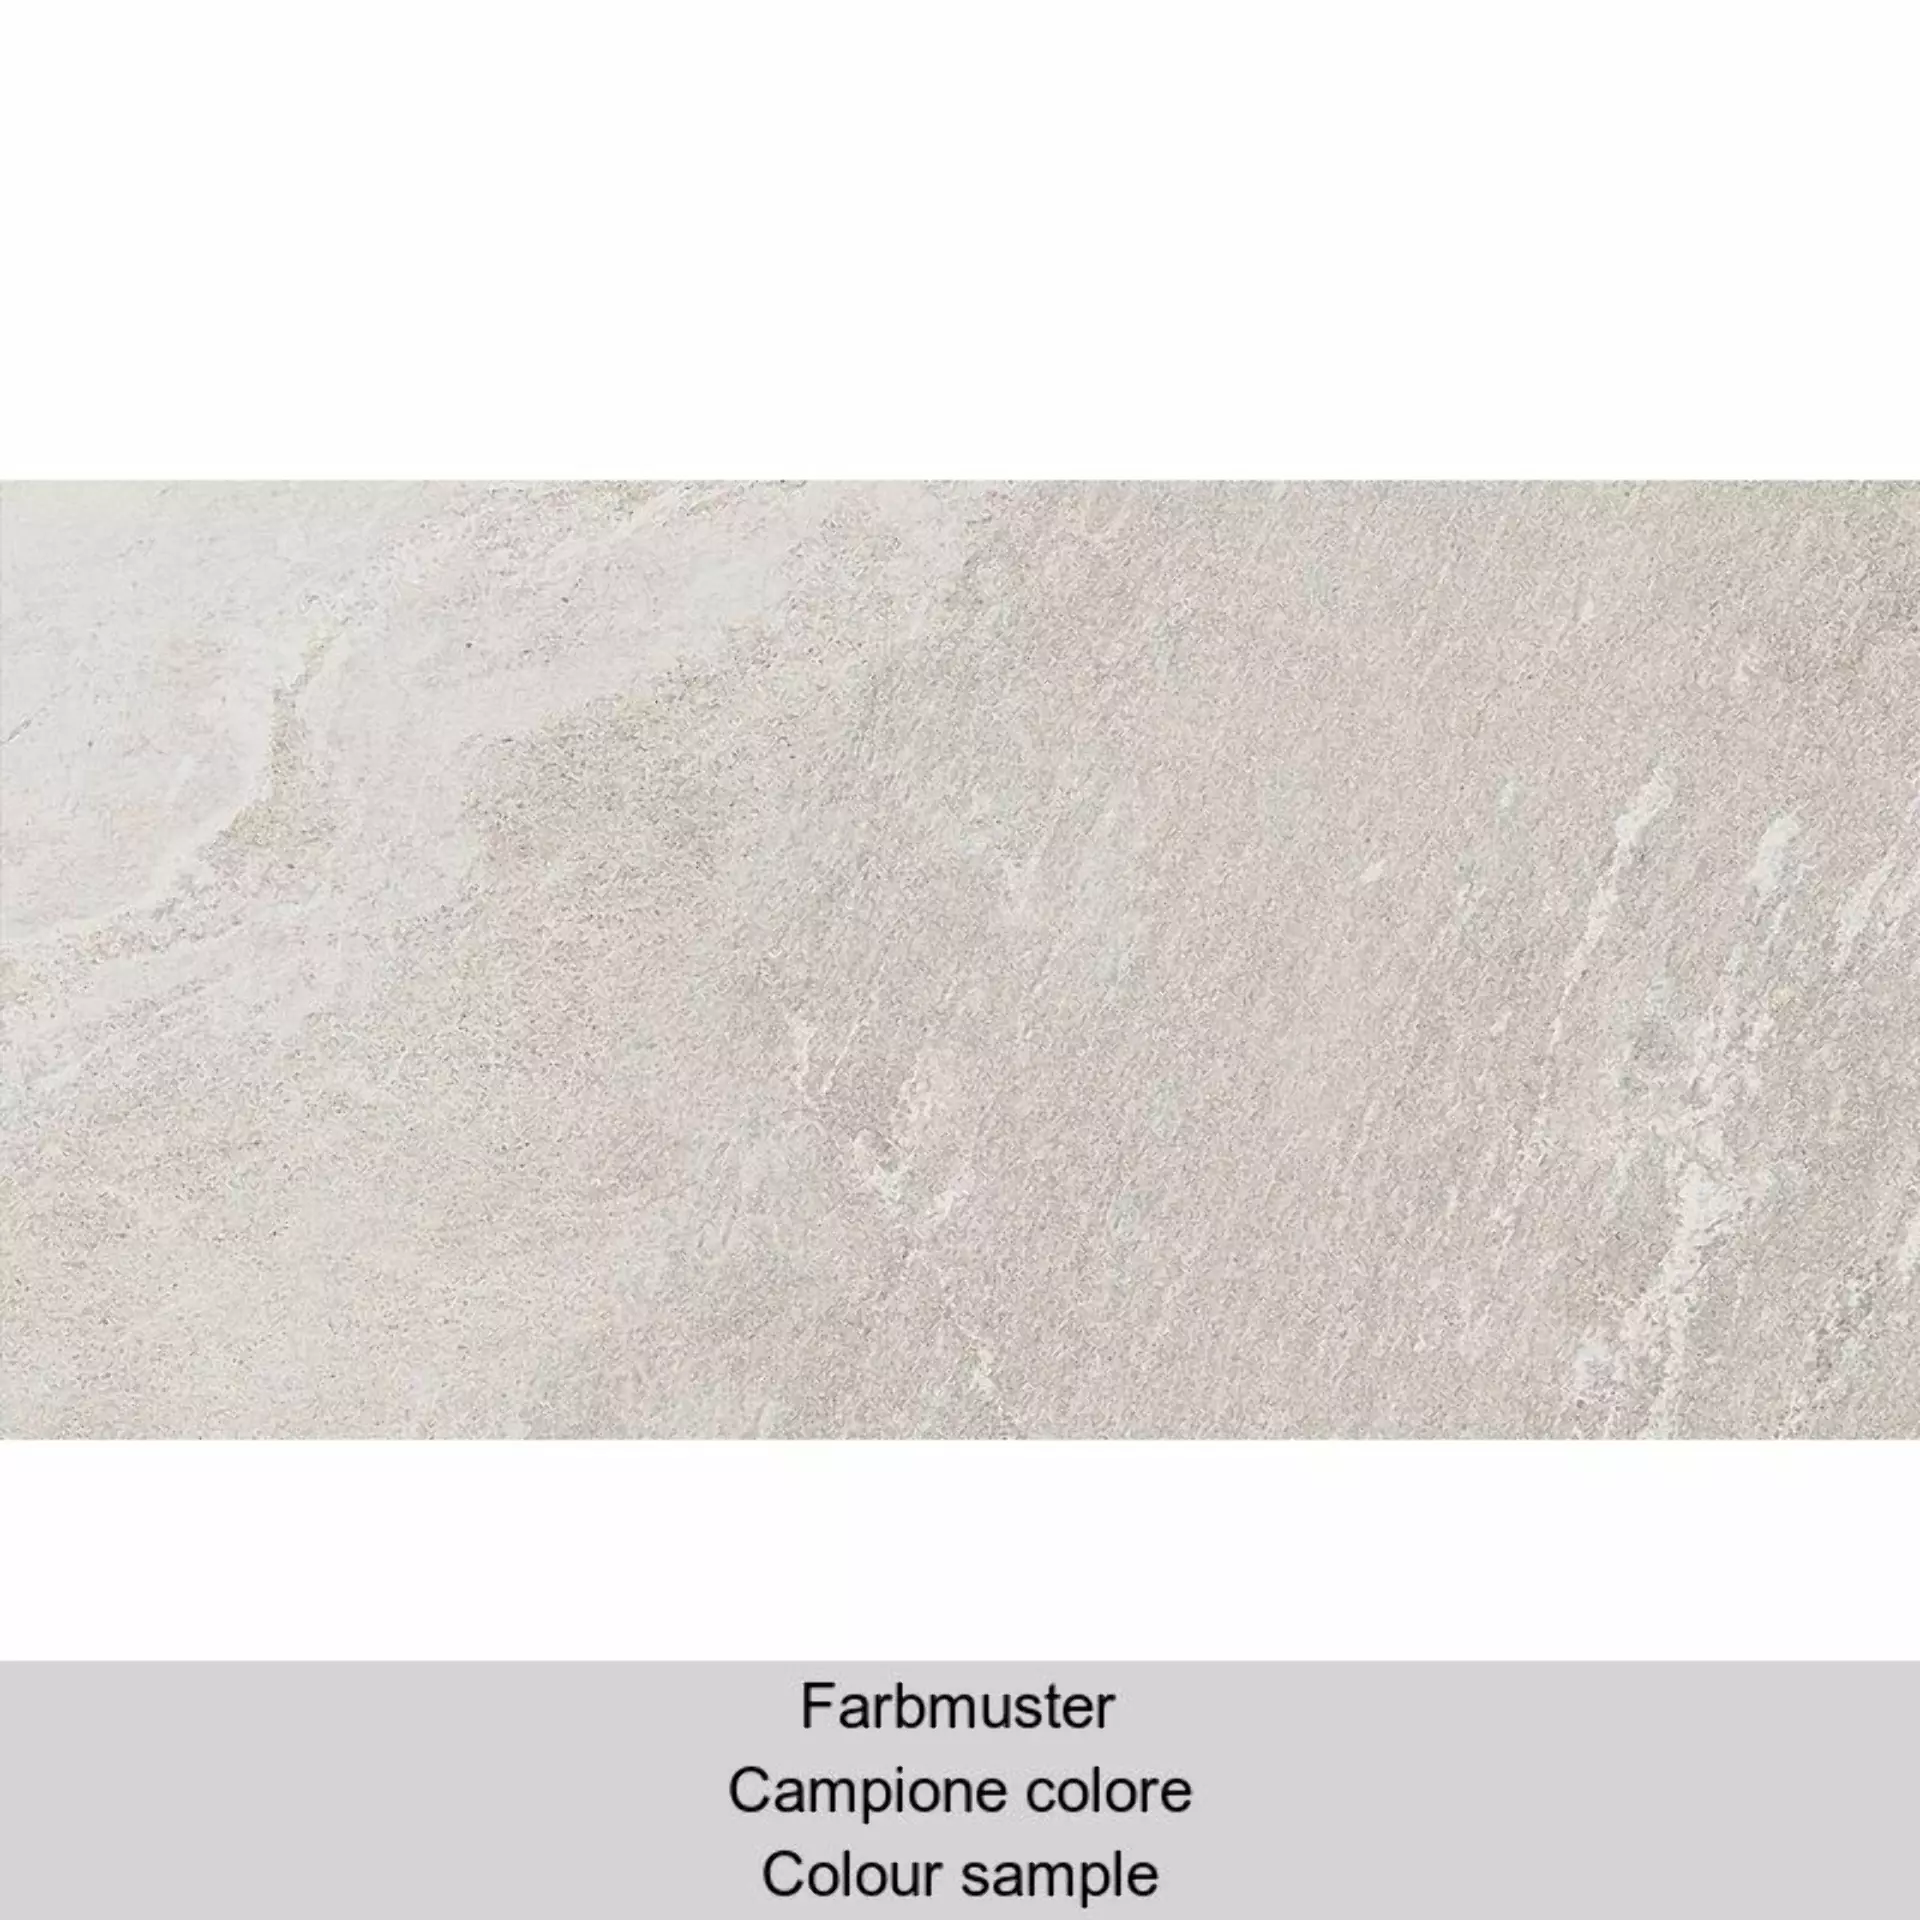 Century Stonerock White Stone Two – Grip 0119806 50x100cm rectified 20mm